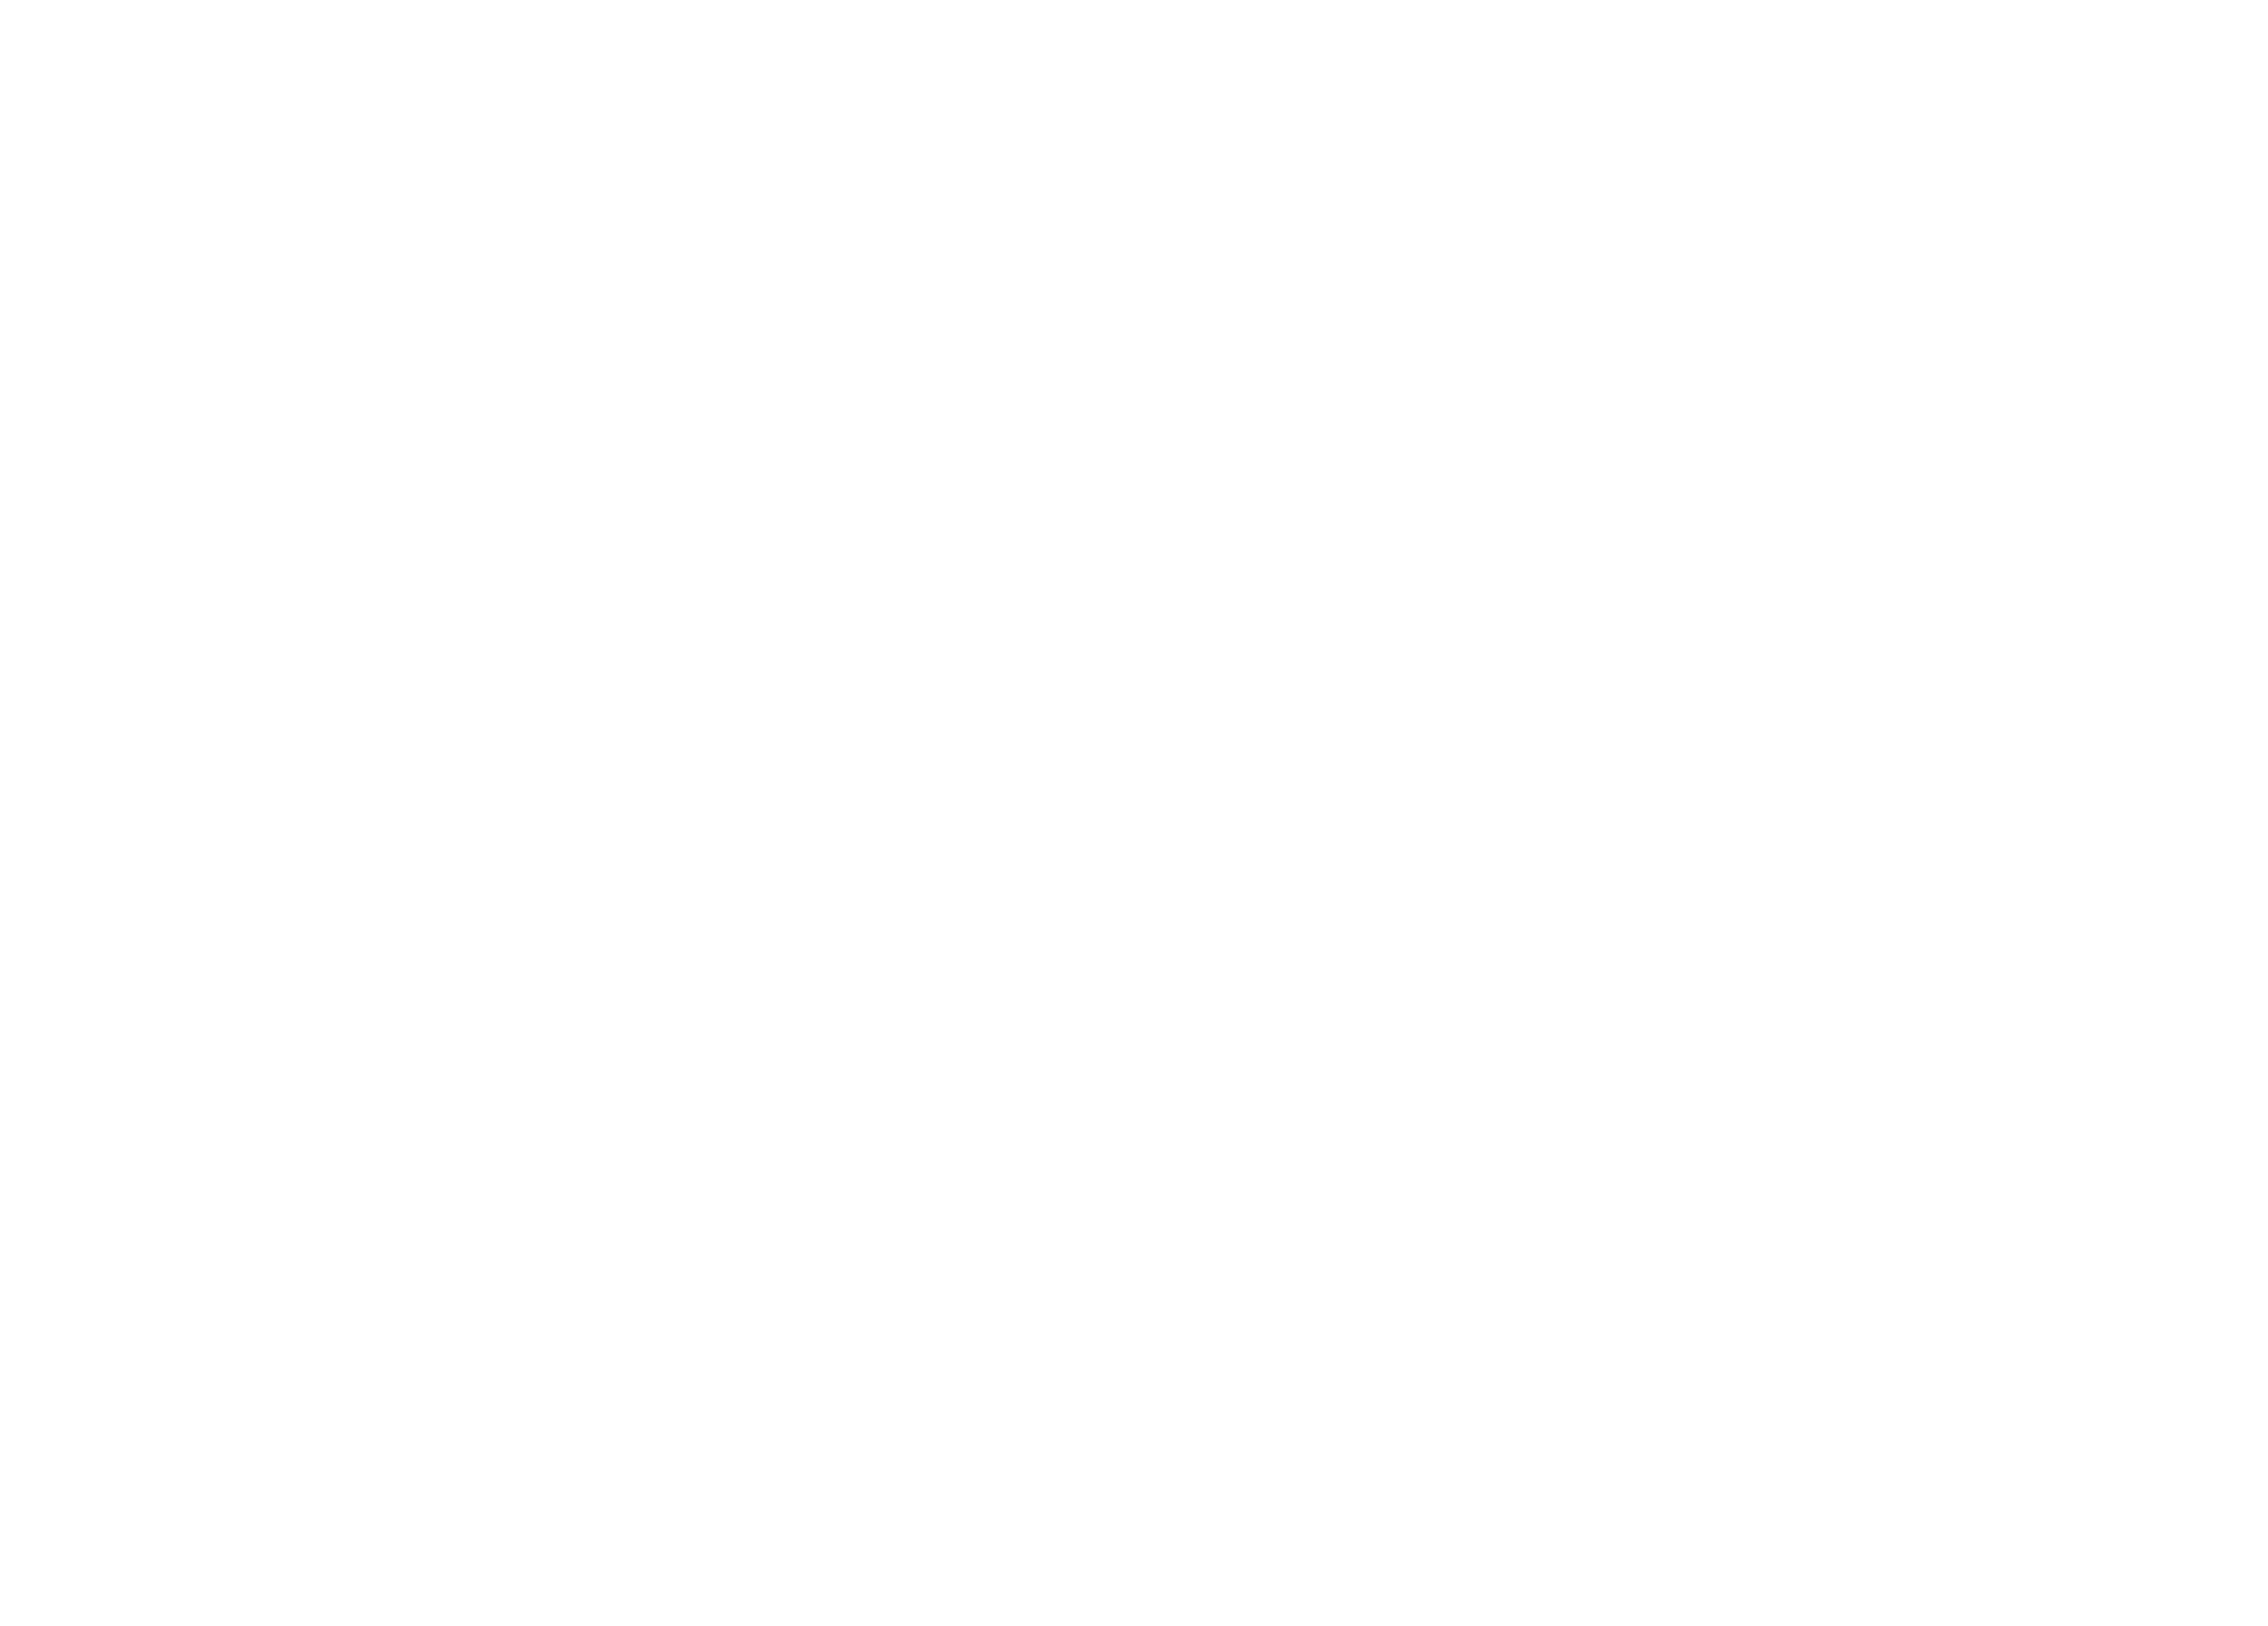 Bill Simmons Photo